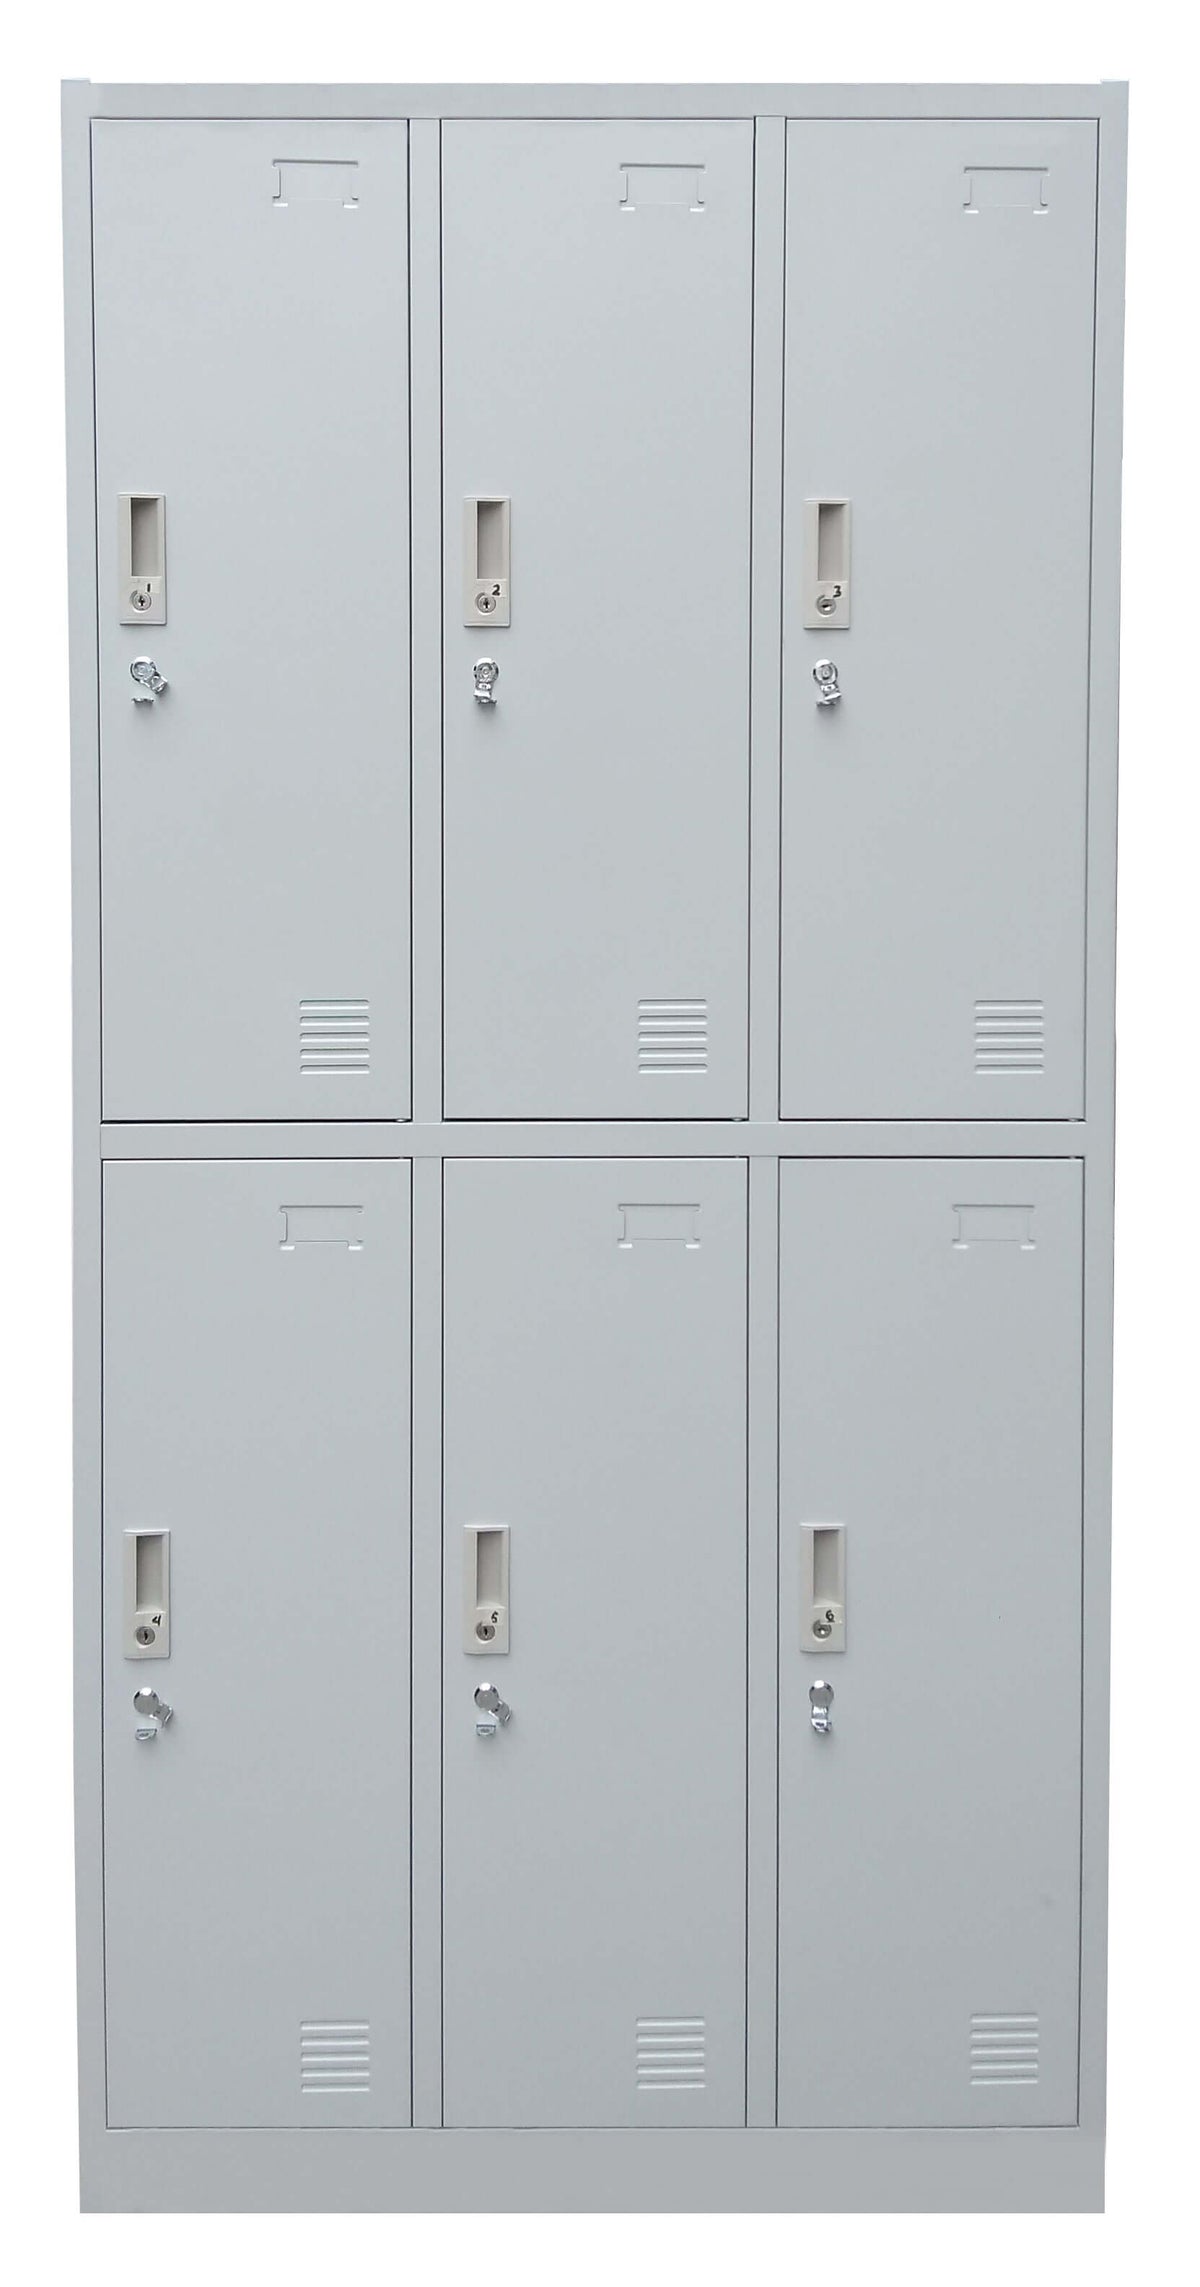 6 Door Steel Locker Cabinet with Padlock Hasp and Name Plate, DL-0645